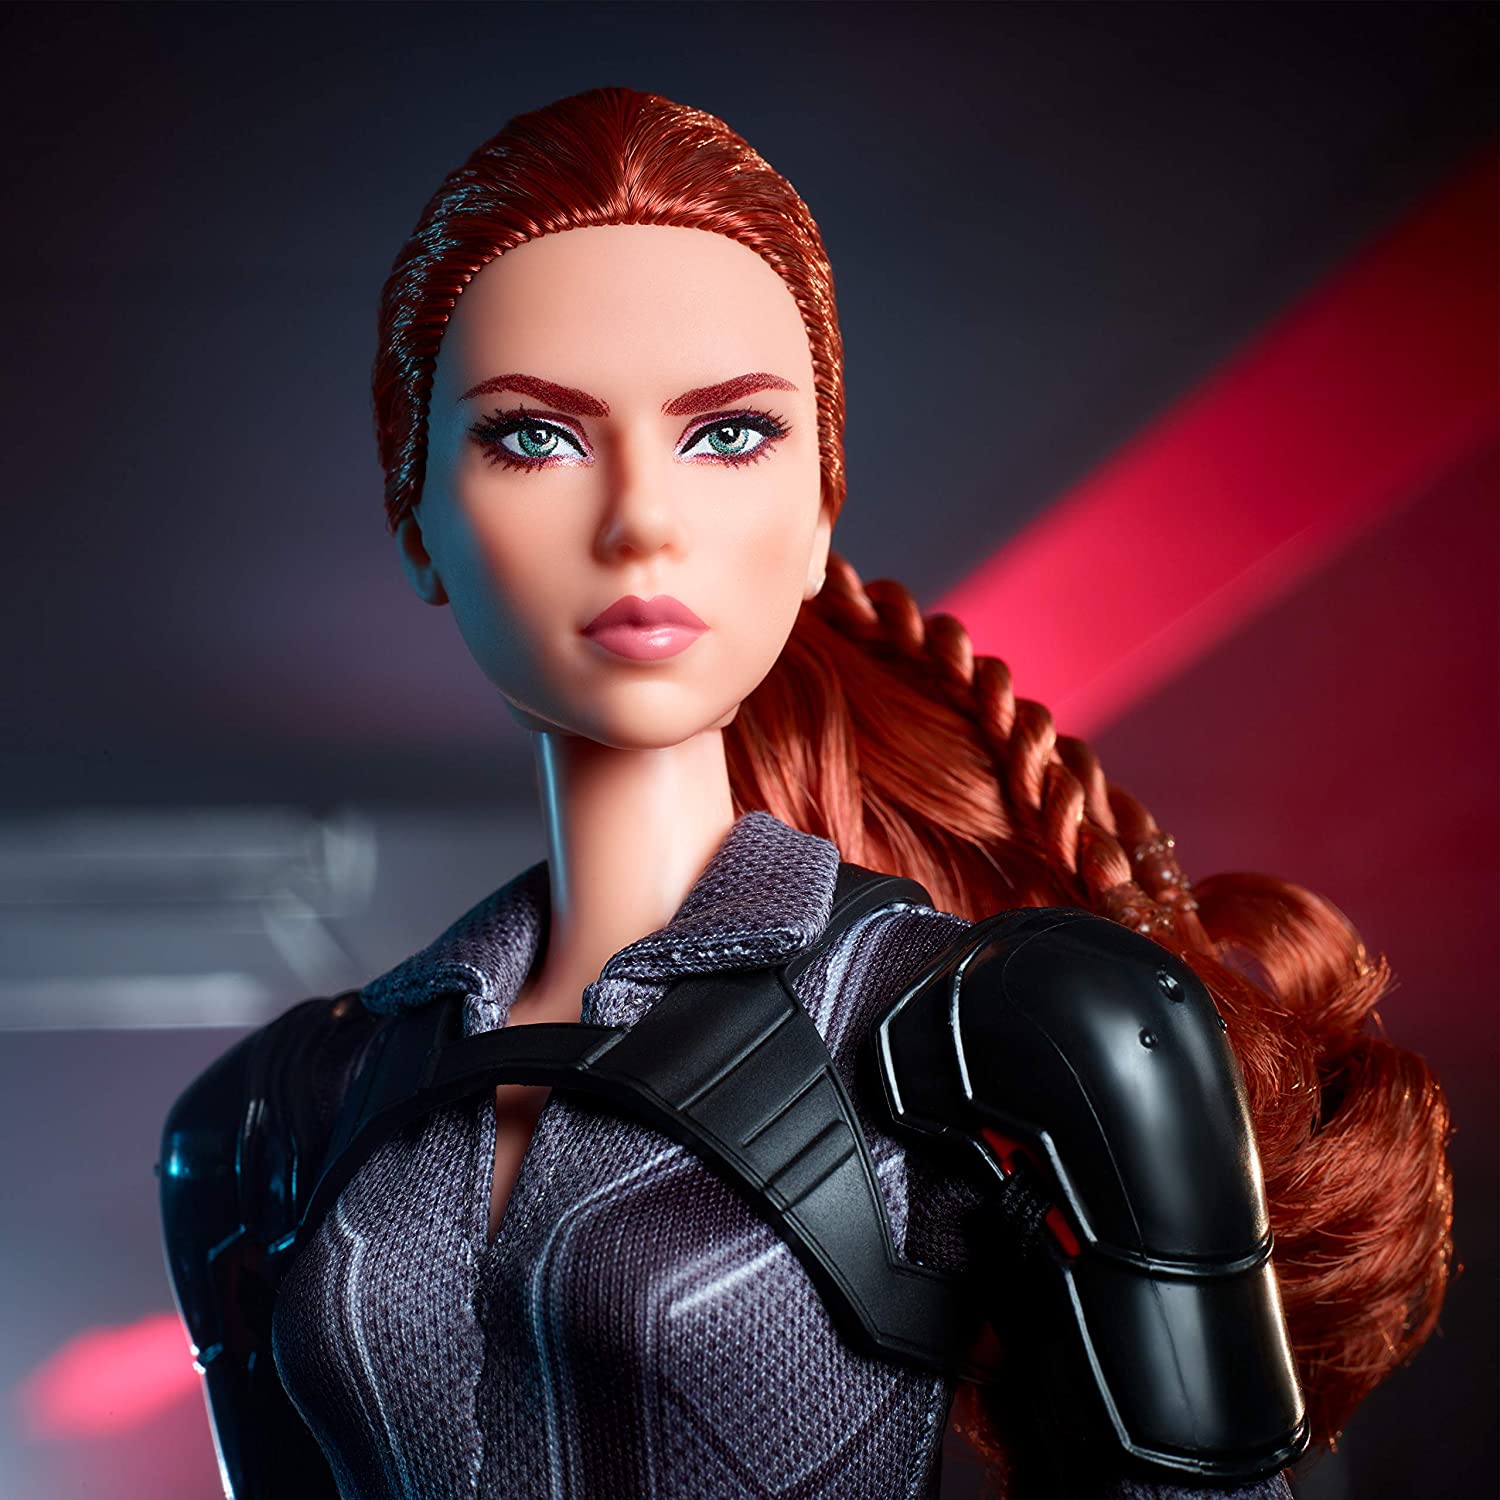 Barbie Black Widow Collector Doll 2020 in black suit is